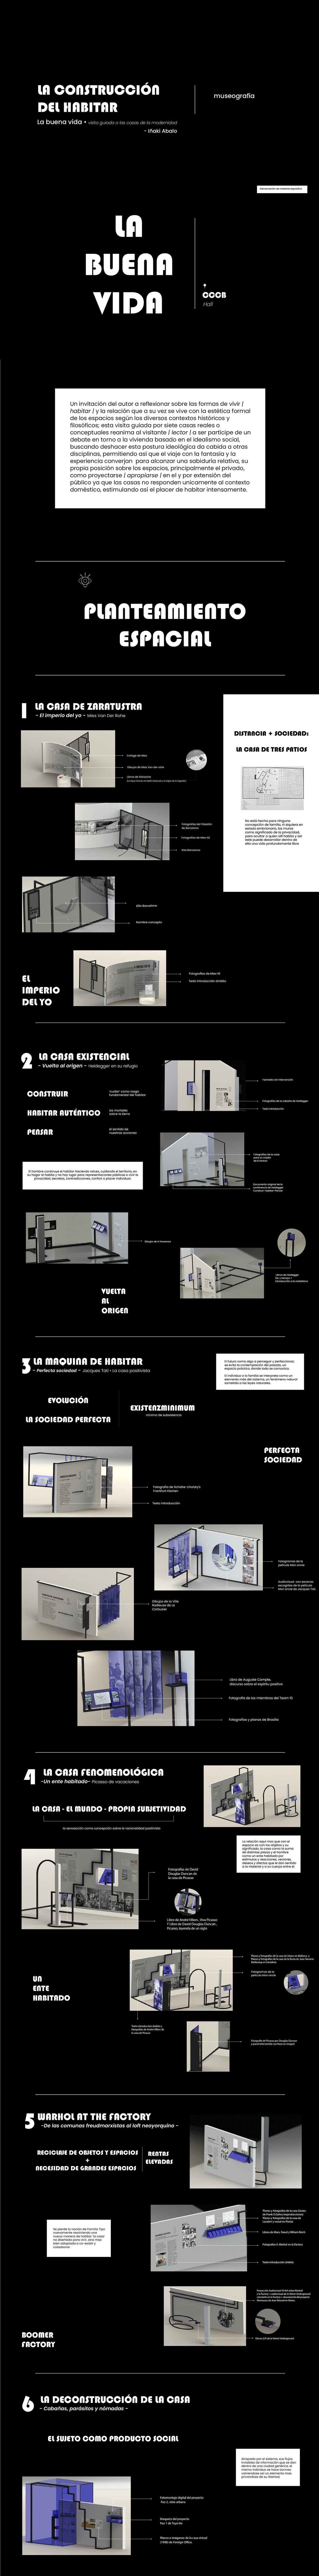 museografia 3dmodeling museum Exhibition  Event 3DDesign Render interior design  Event Design